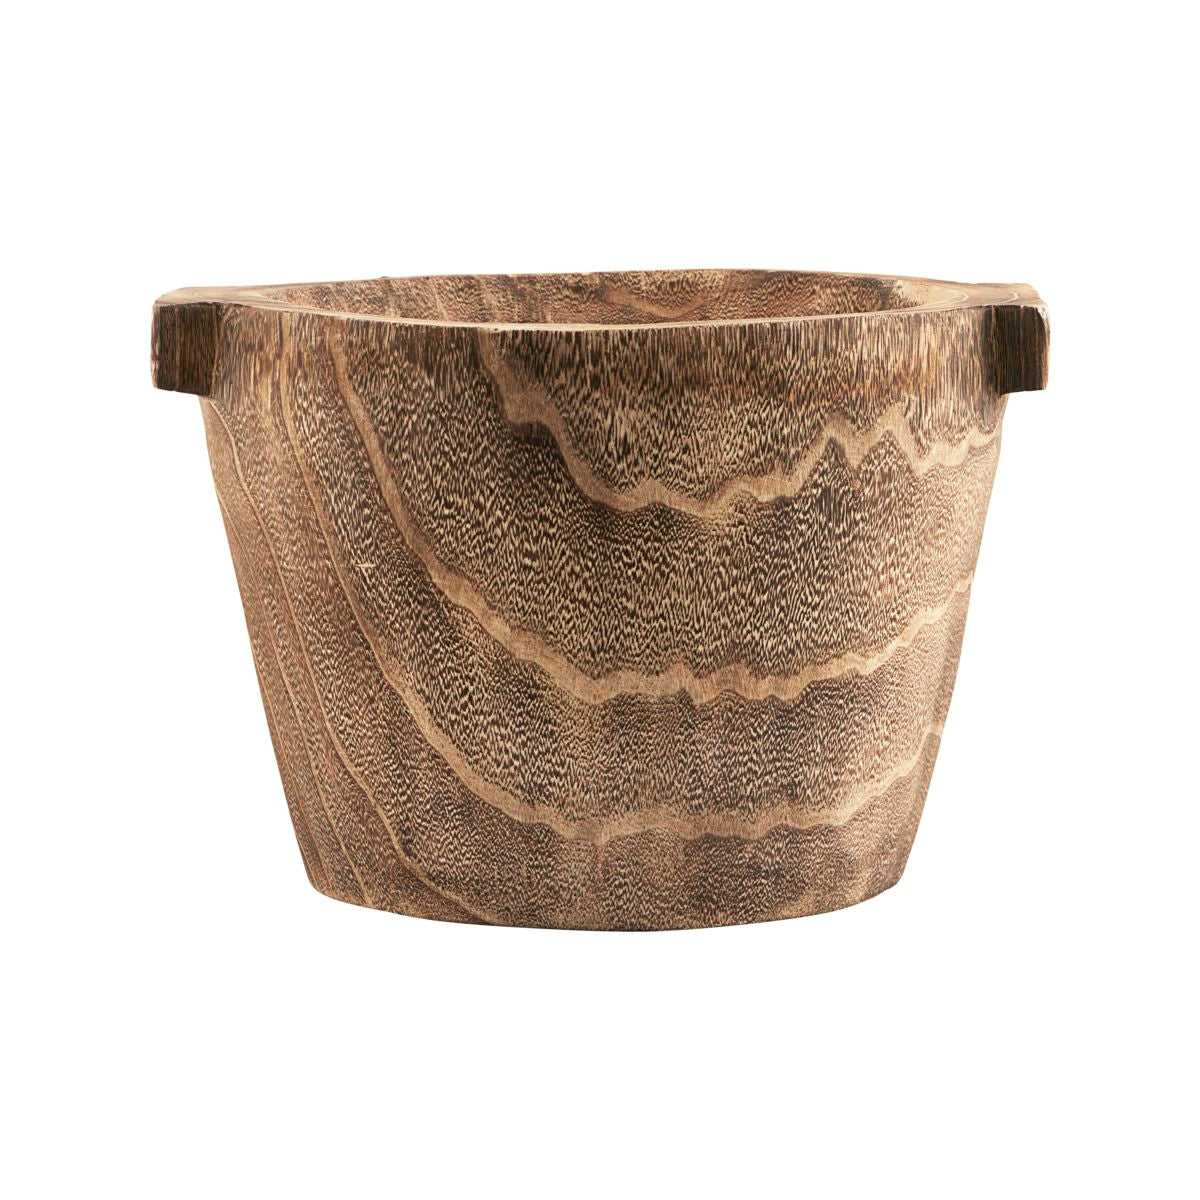 Craft Wood Bowl